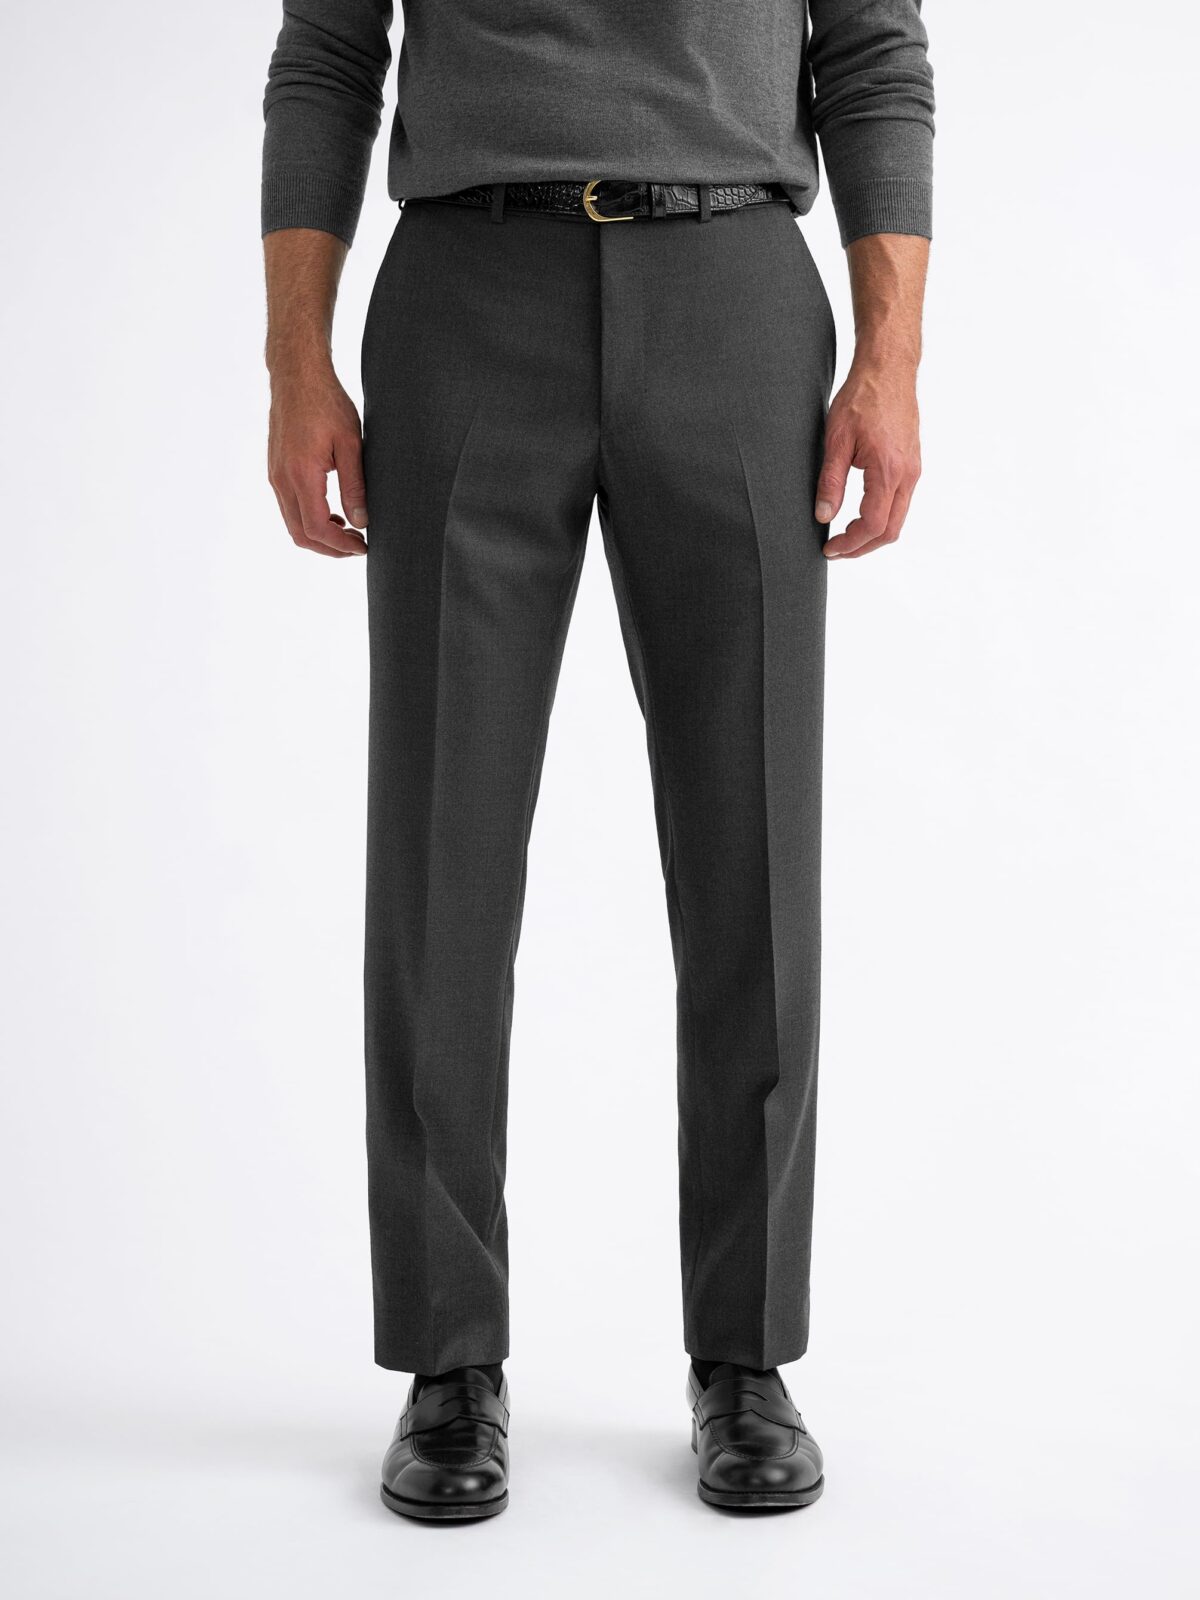 John Varvatos Charcoal Gray 100% Wool Slim Fit Dress Pants | The Suit Depot